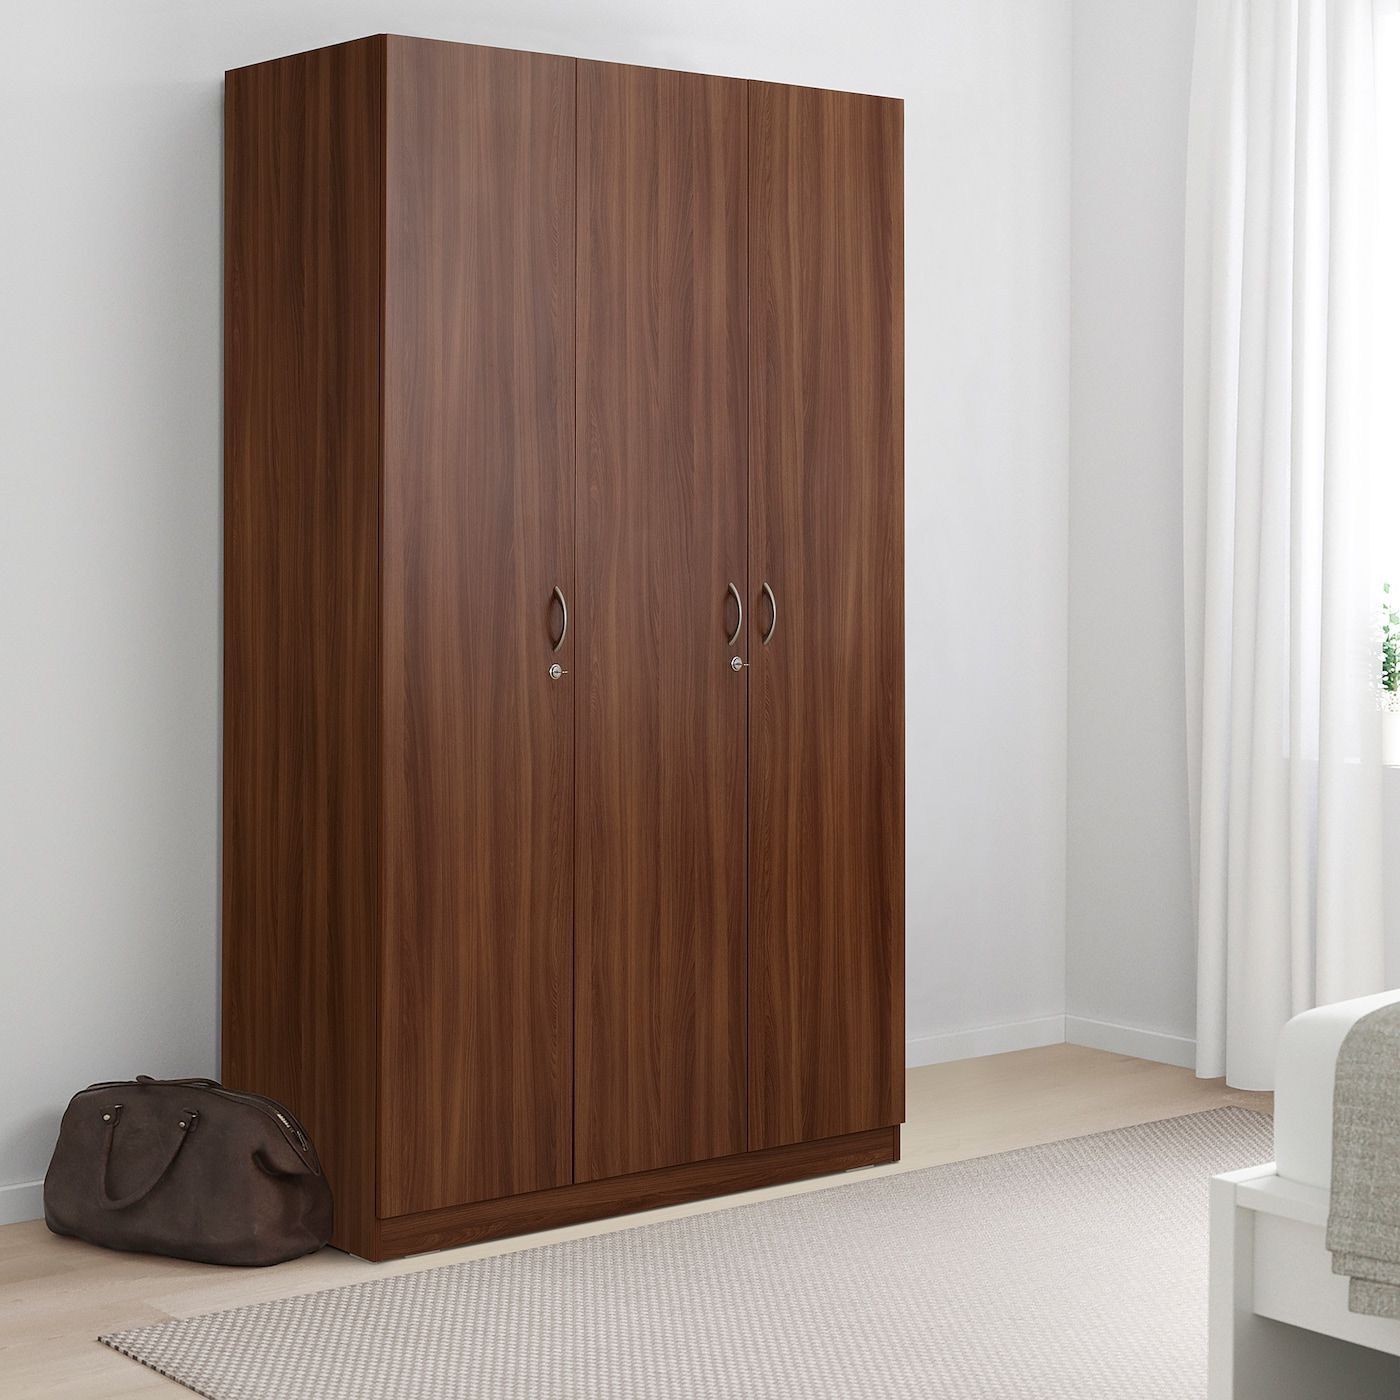 Nodeland Wardrobe With 3 Doors, Medium Brown, 120x52x202 Cm  (471/4x203/8x791/2") – Ikea Inside Famous Medium Size Wardrobes (Photo 10 of 10)